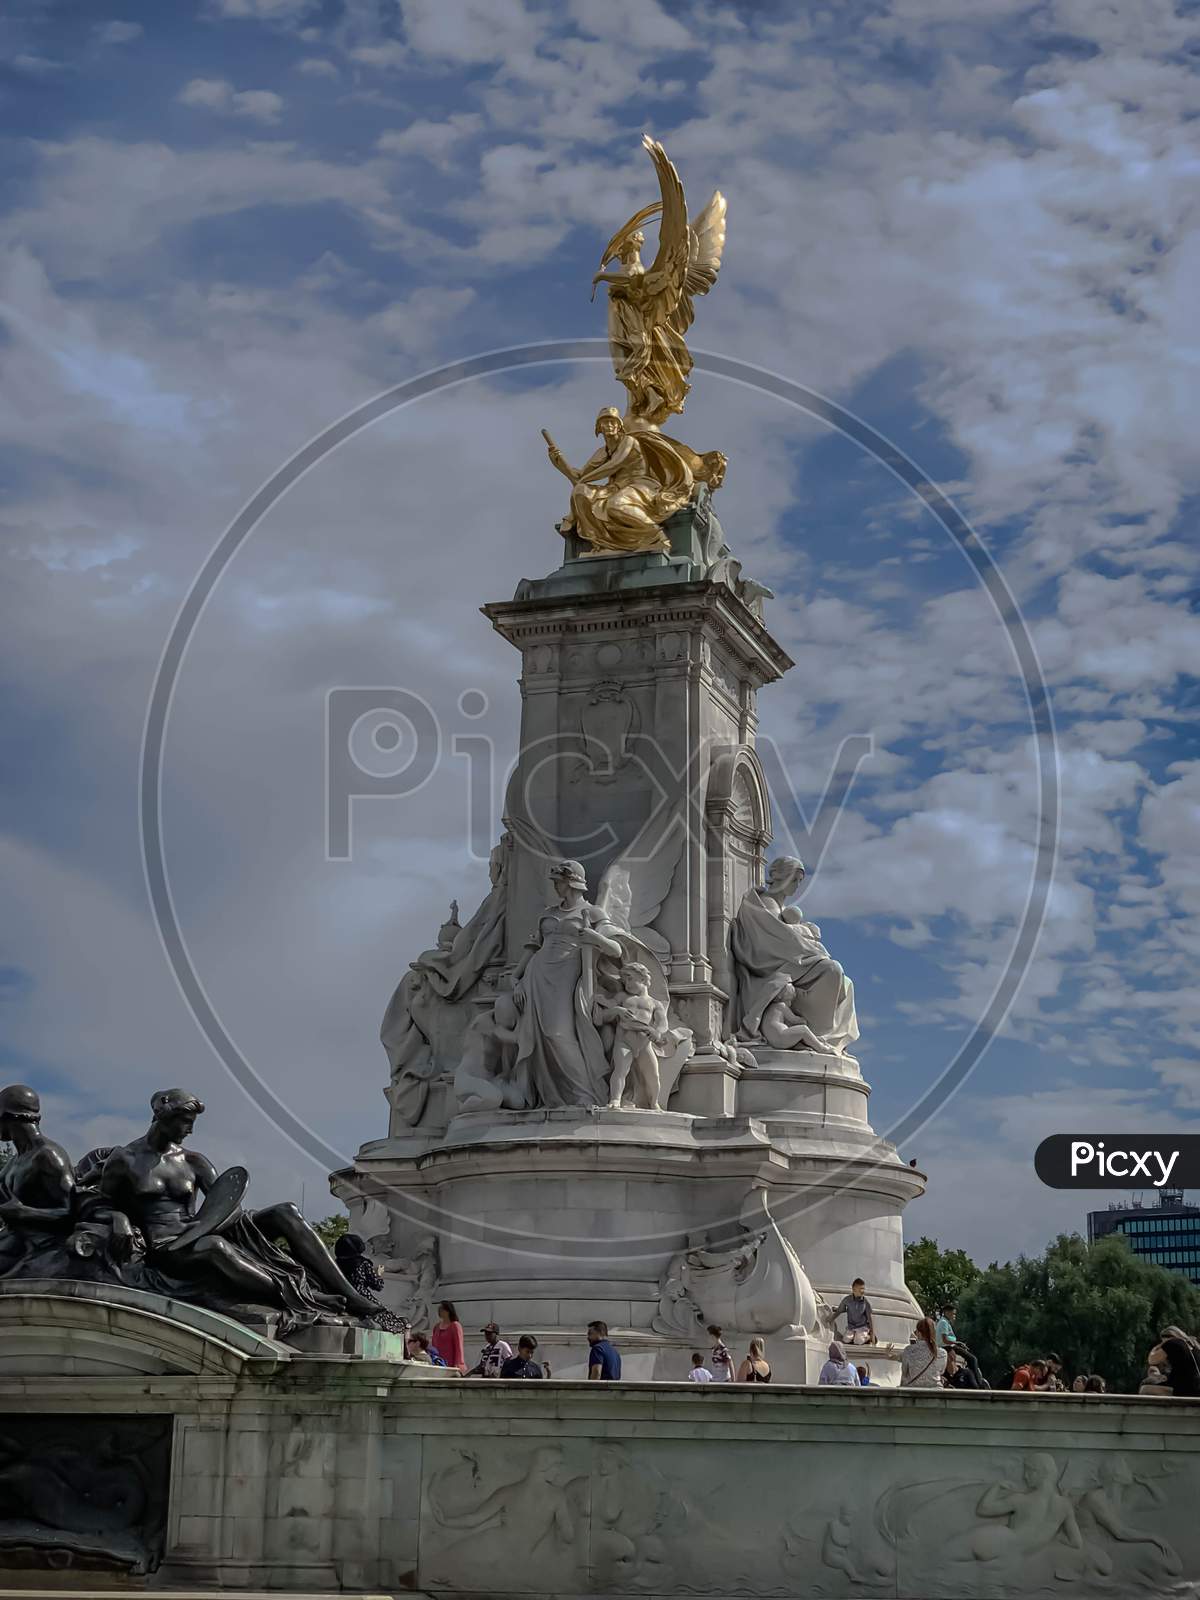 Queen Victoria monument statue in London